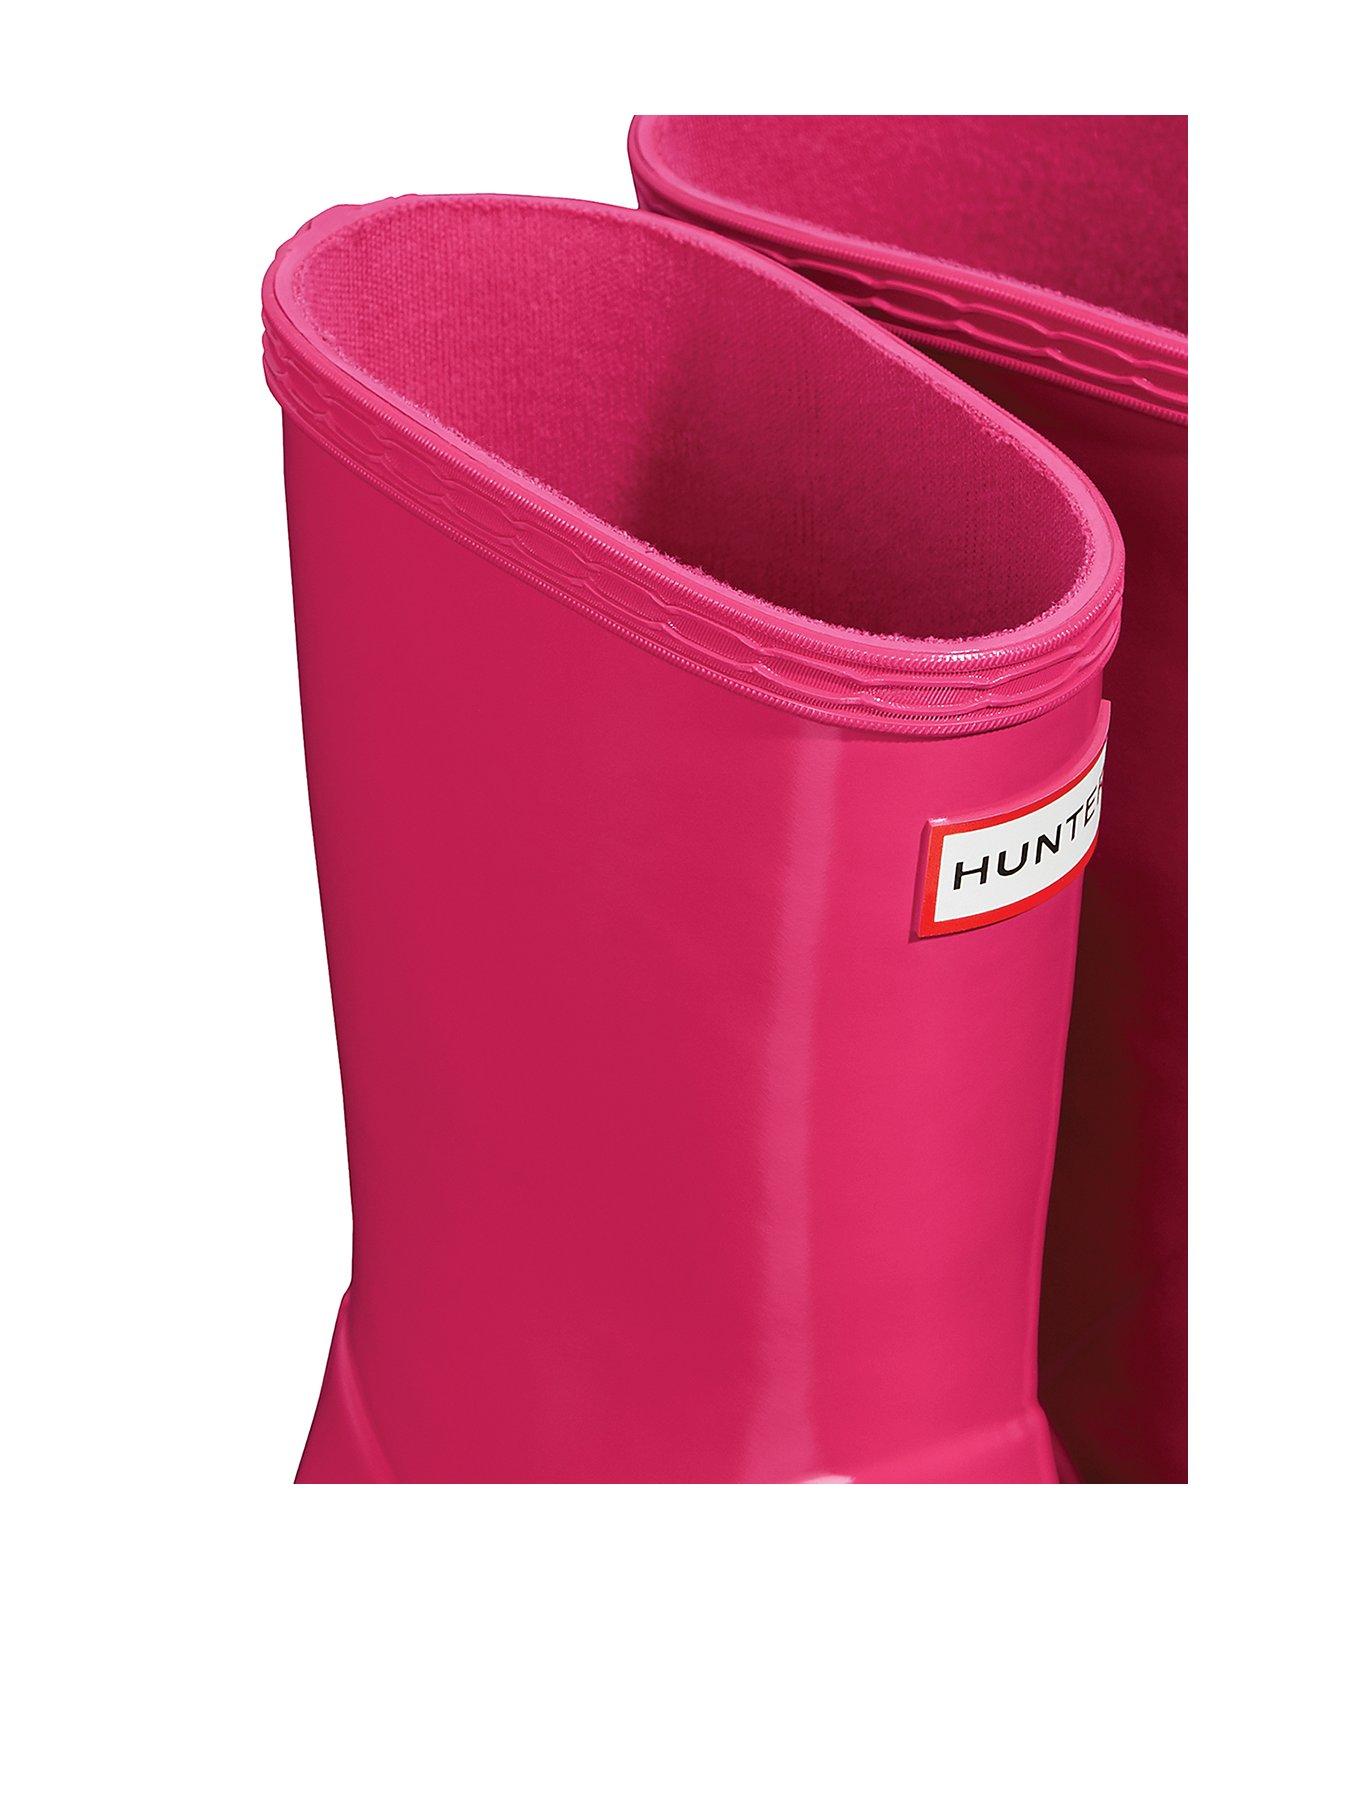 Kids Original Infant First Classic Gloss Wellington Boots - Bright Pink